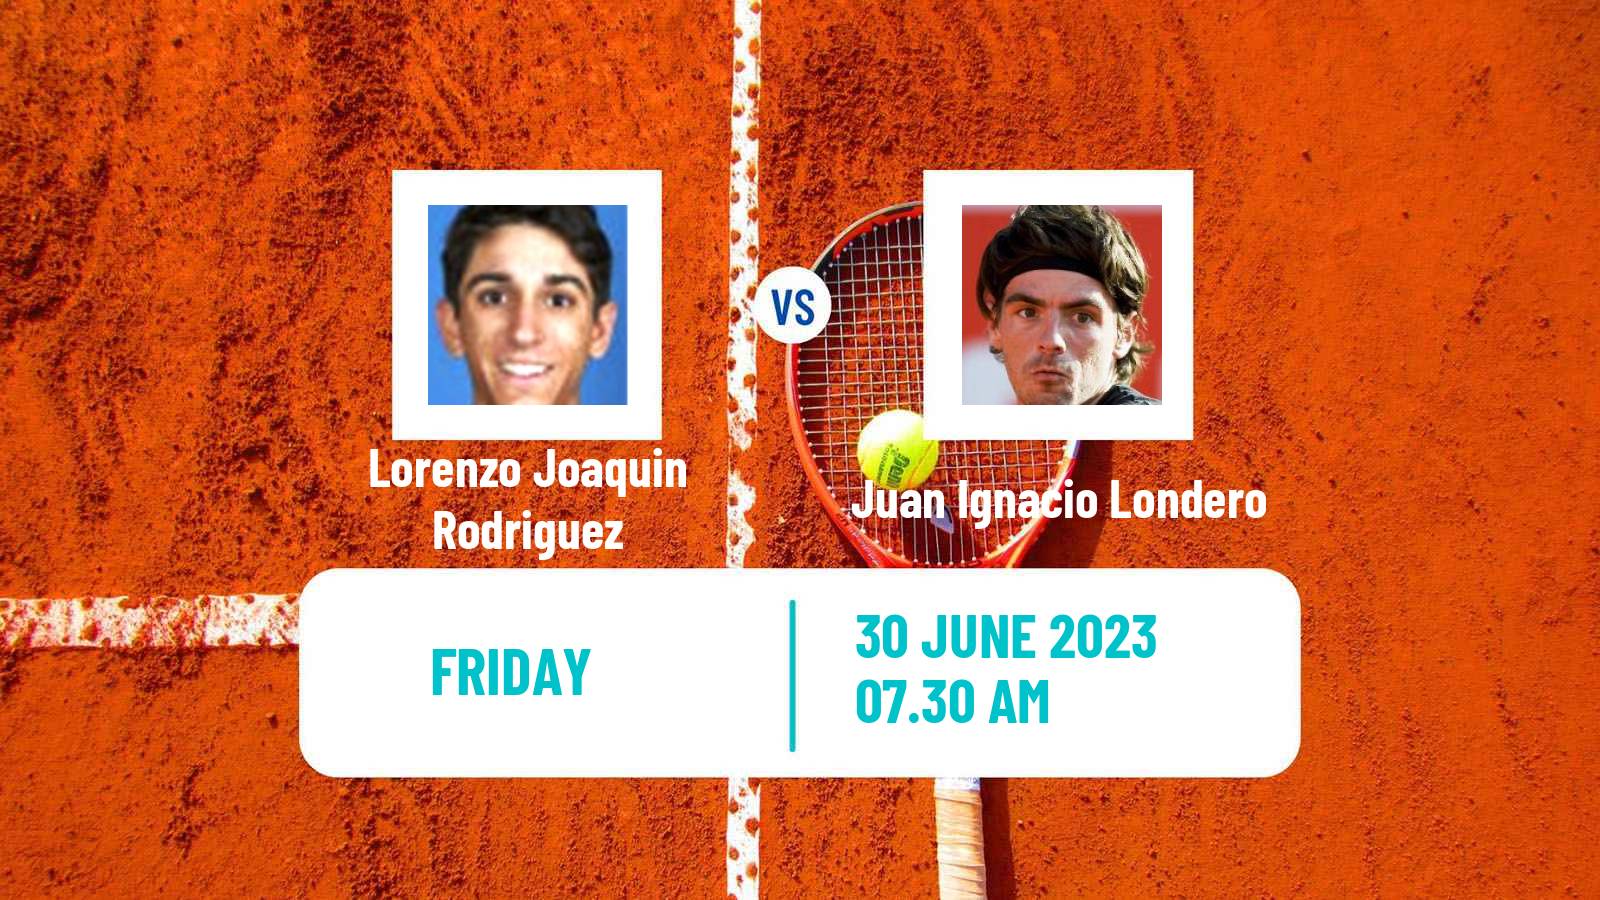 Tennis ITF M25 Rosario Santa Fe Men Lorenzo Joaquin Rodriguez - Juan Ignacio Londero